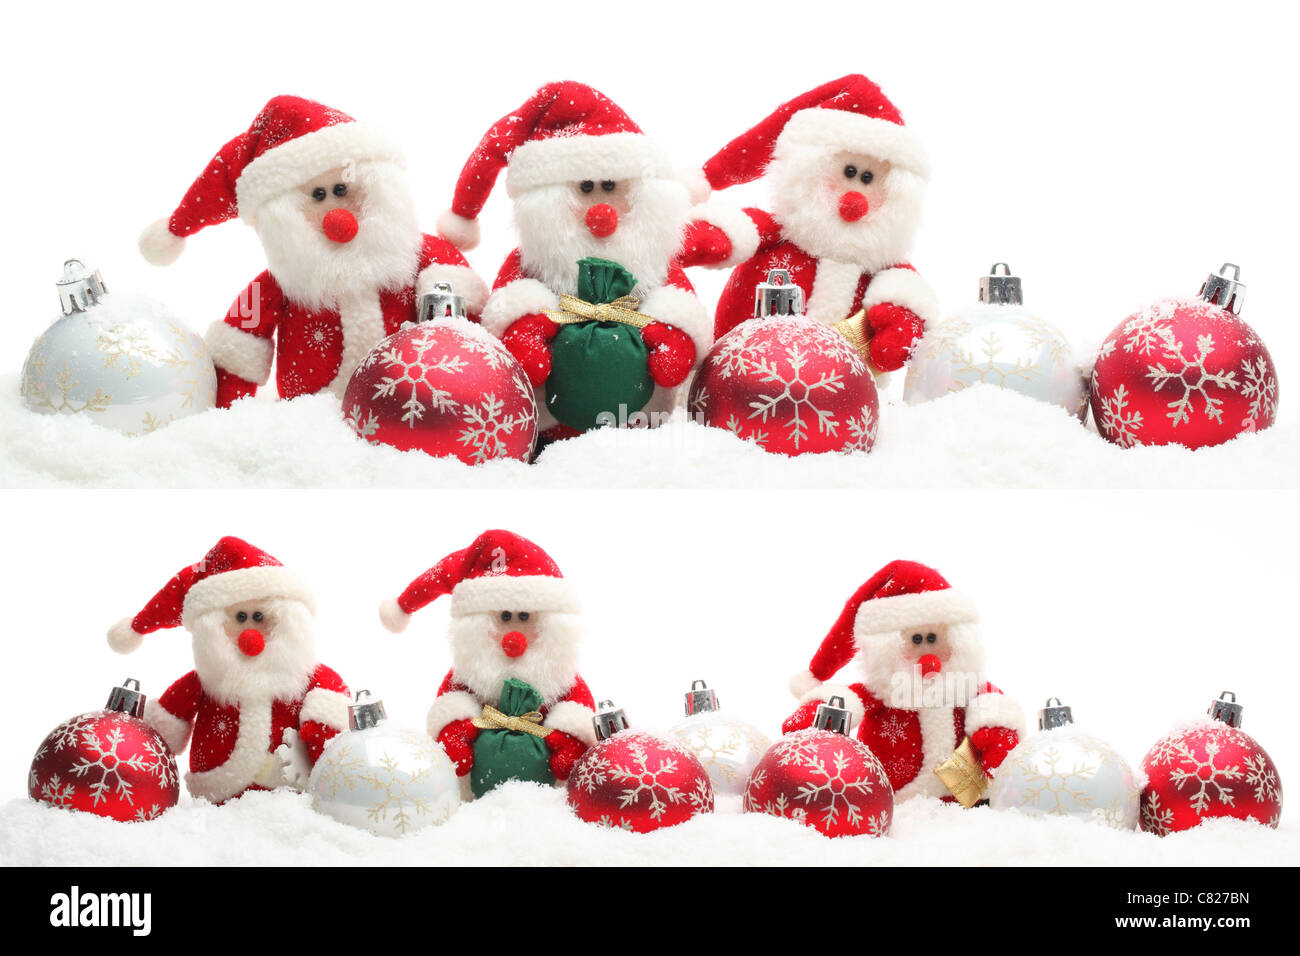 Santa Claus doll and Christmas balls on snow Stock Photo